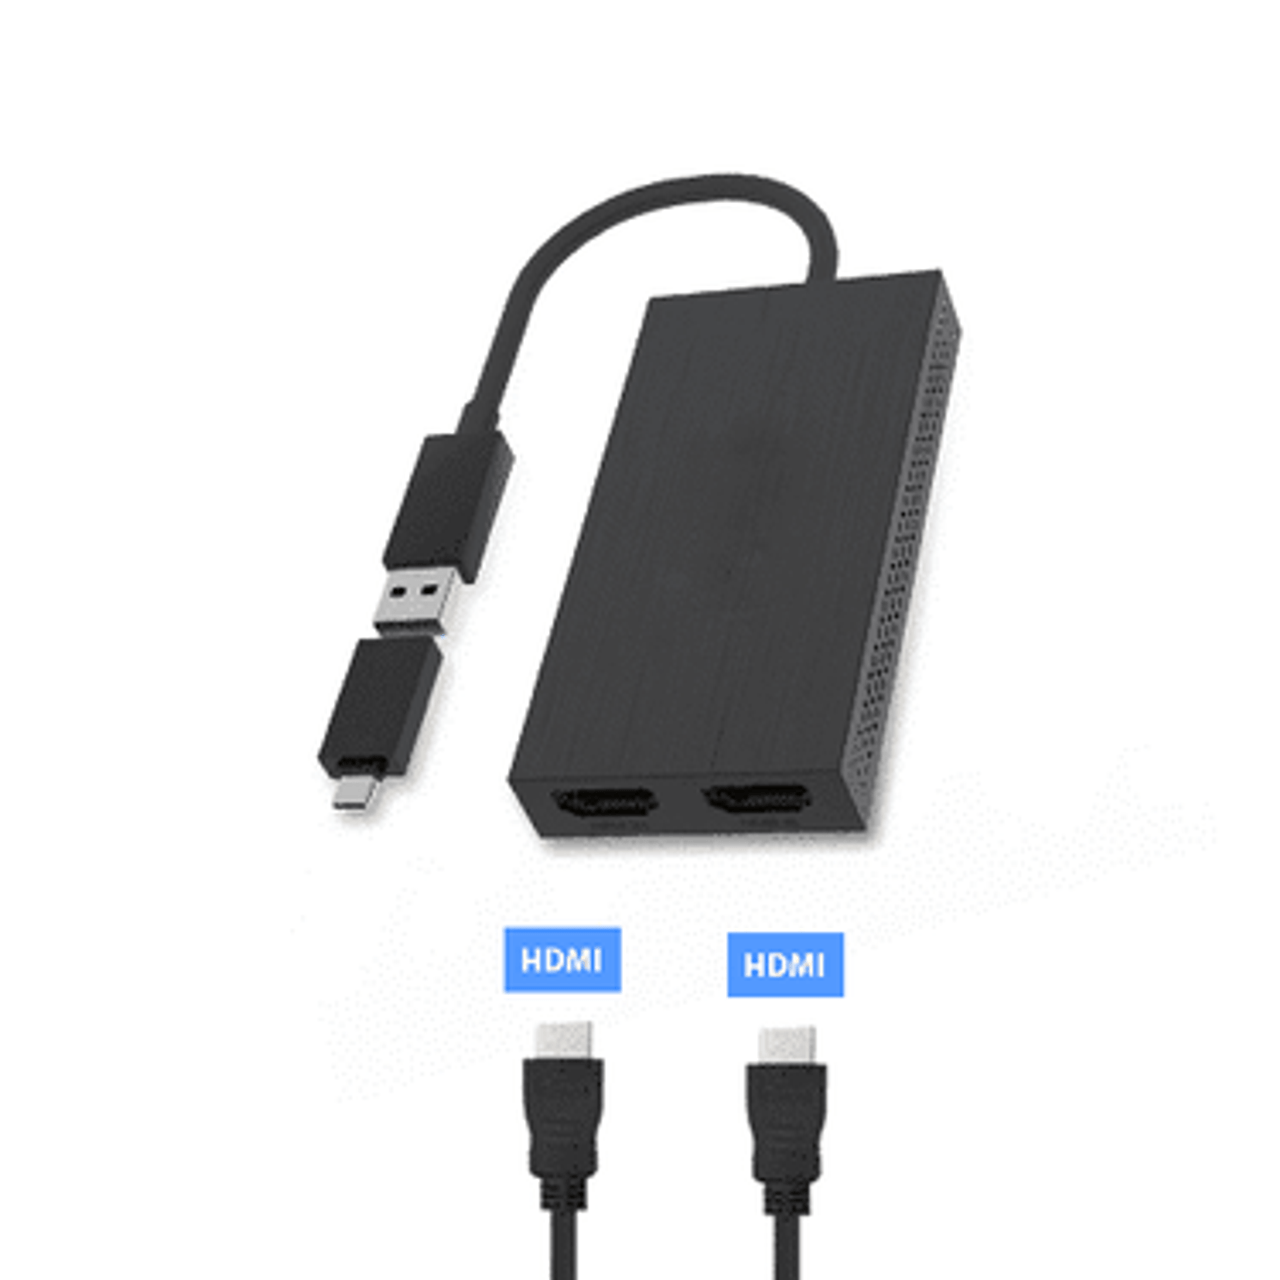 4XEM USB 3.0 to Dual HDMI 4K Display Adapter - 1 x Type A USB 3.0 Powered USB Male - 2 x HDMI HDMI 1.4 Digital Audio/Video Female - 3840 x 2160 Supported - Black - 4XUG7602H